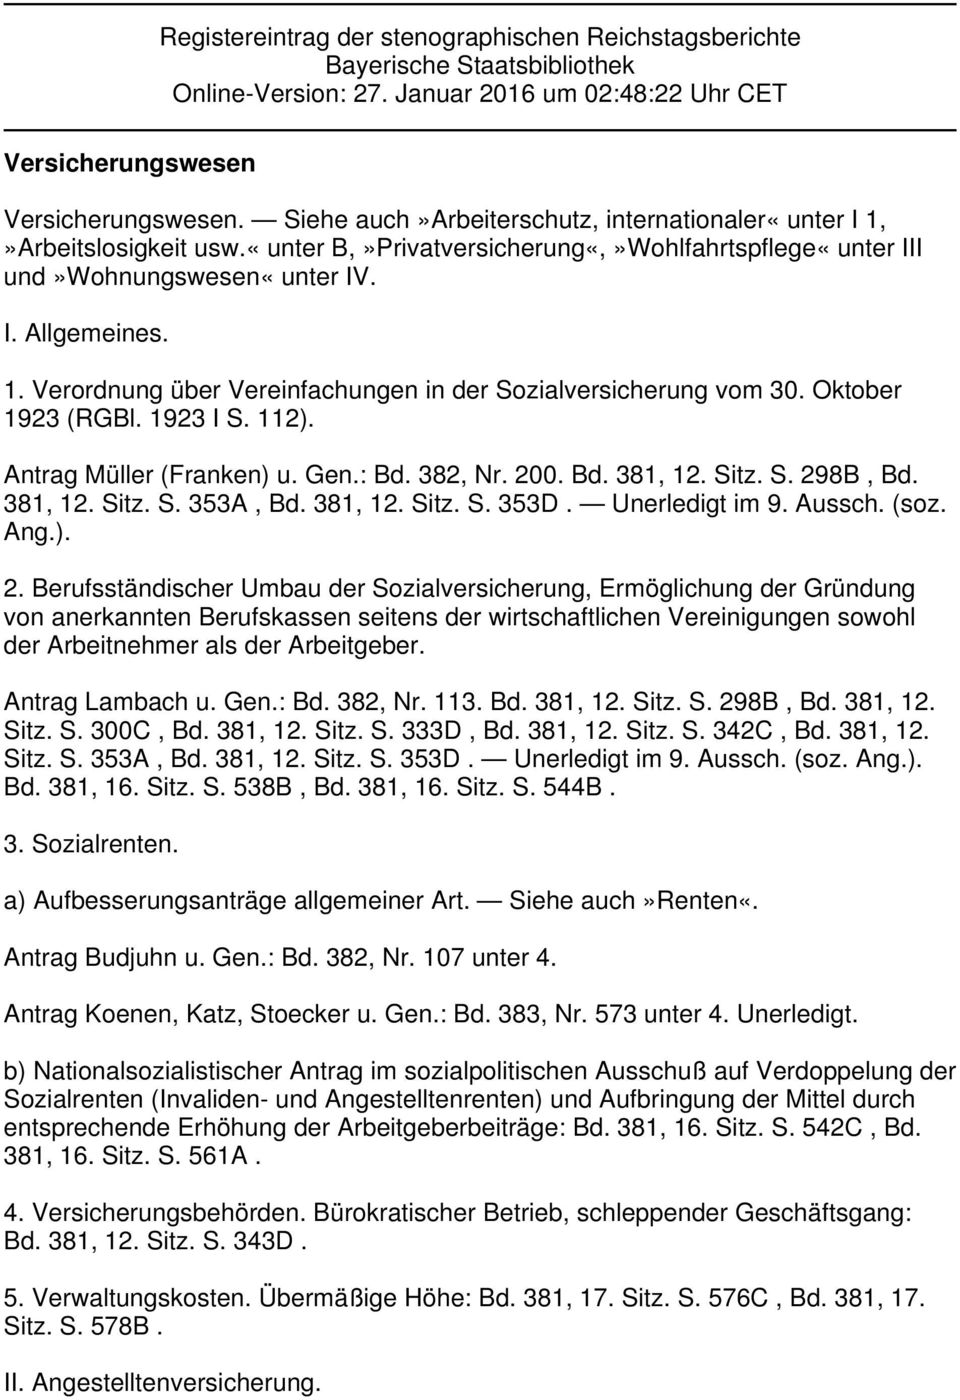 Oktober 1923 (RGBl. 1923 I S. 112). Antrag Müller (Franken) u. Gen.: Bd. 382, Nr. 200. Bd. 381, 12. Sitz. S. 298B, Bd. 381, 12. Sitz. S. 353A, Bd. 381, 12. Sitz. S. 353D. Unerledigt im 9. Aussch.